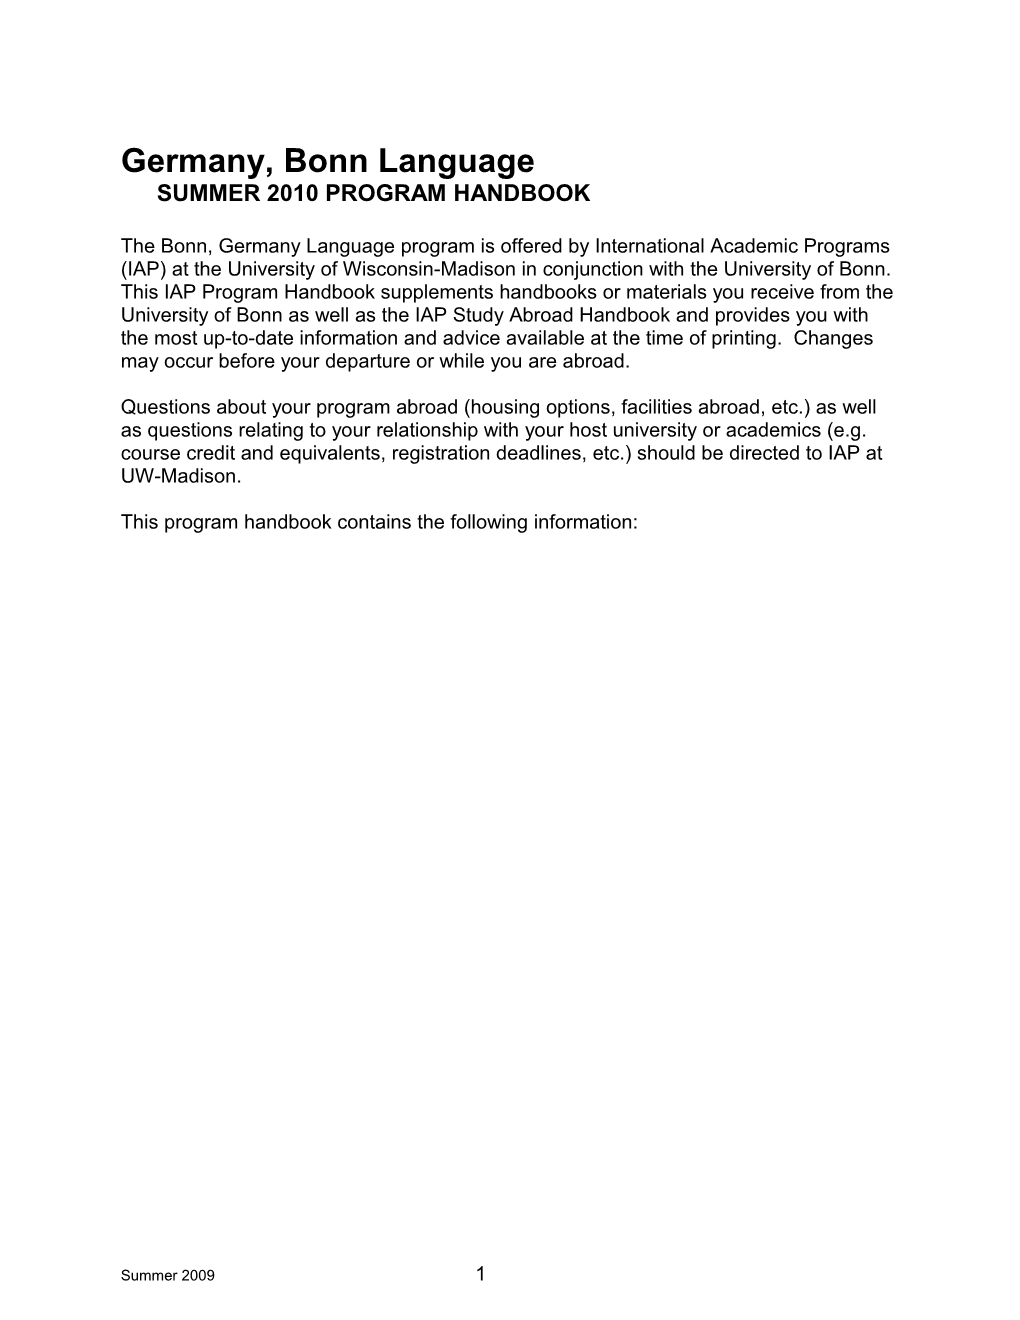 Germany, Bonn Languagesummer 2010 Program Handbook